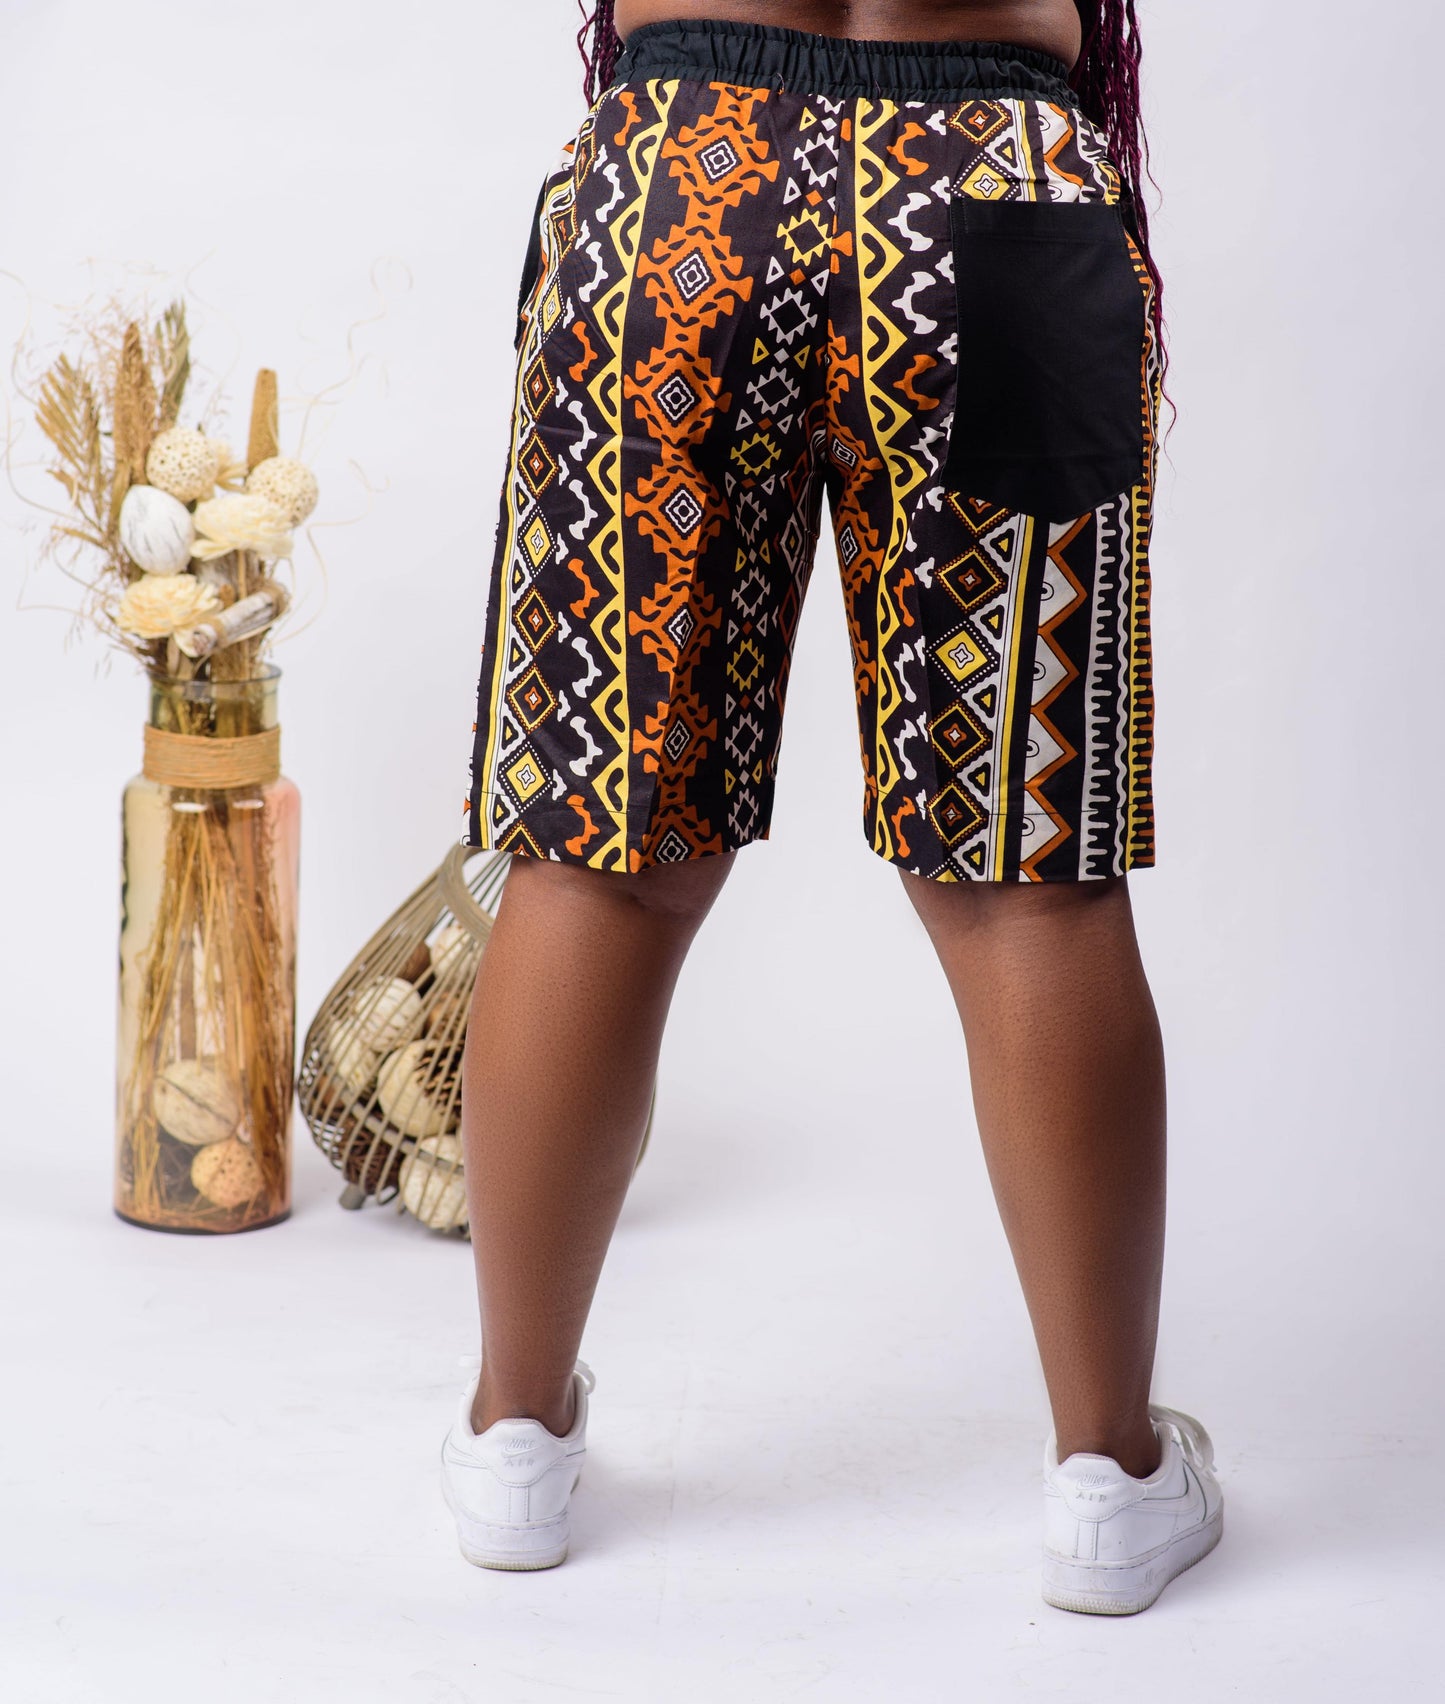 Handmade Nigerian Shorts